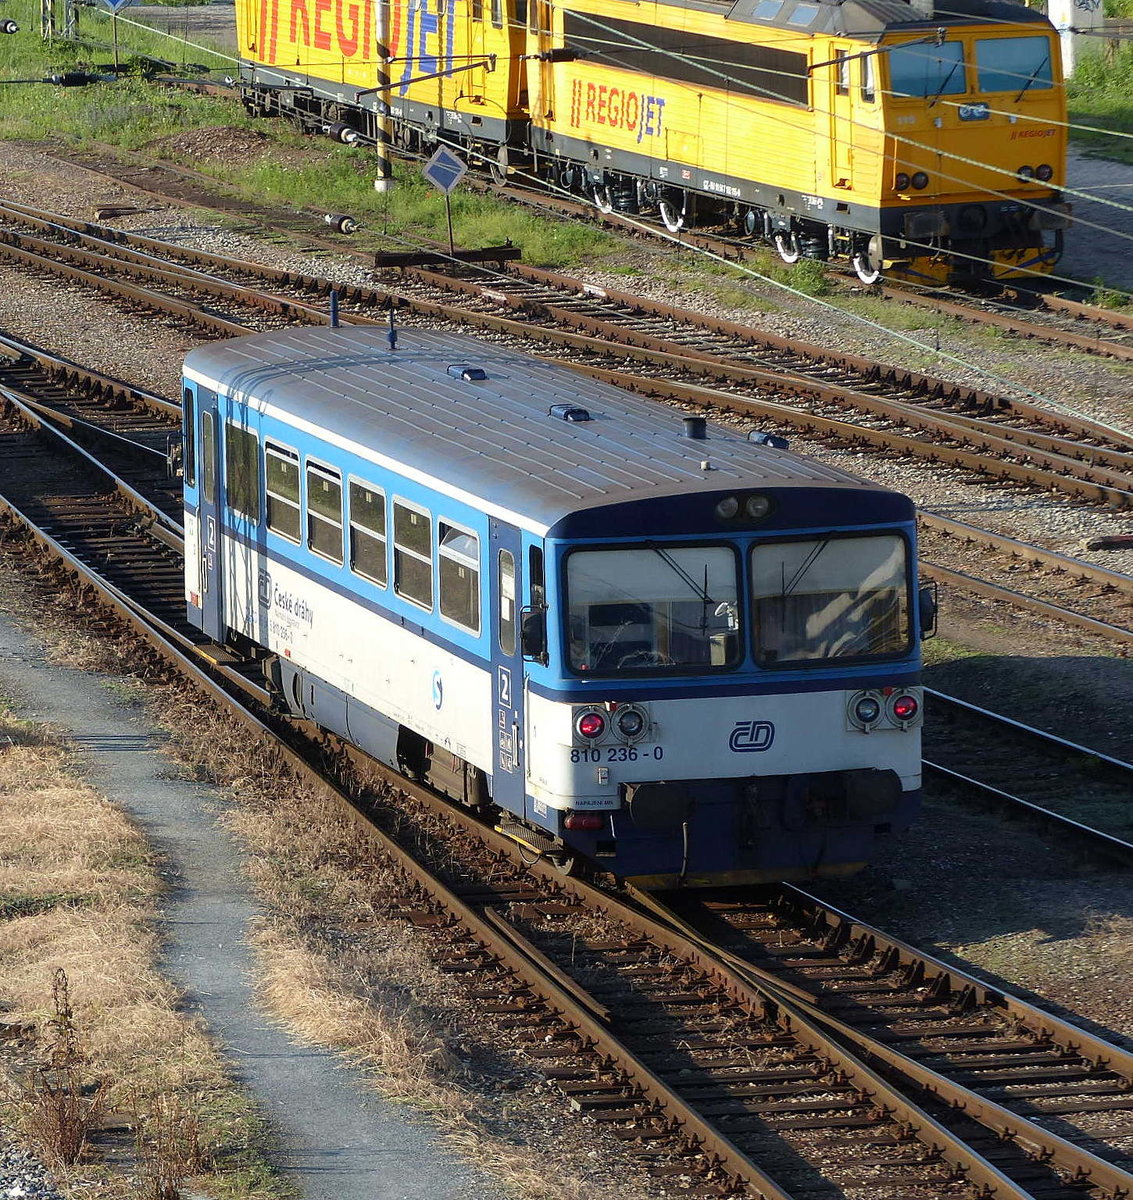 ČD 810 236-0 als Os 25925 von Rudna u Prahy nach Praha hl.n., am 07.06.2019 in Praha-Smichov.